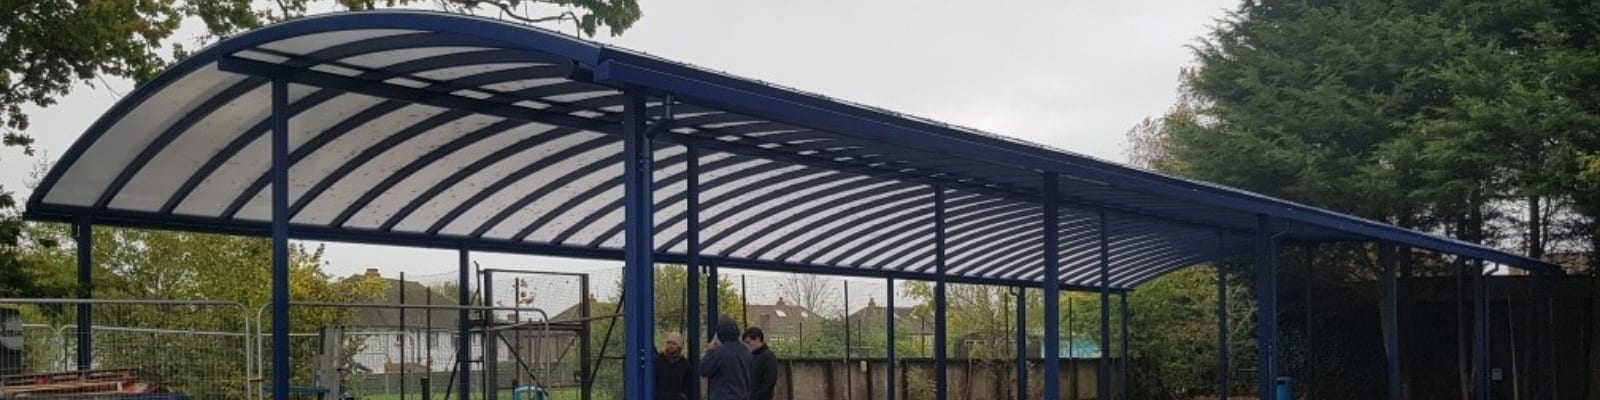 Warlingham School Curved Roof Shelter